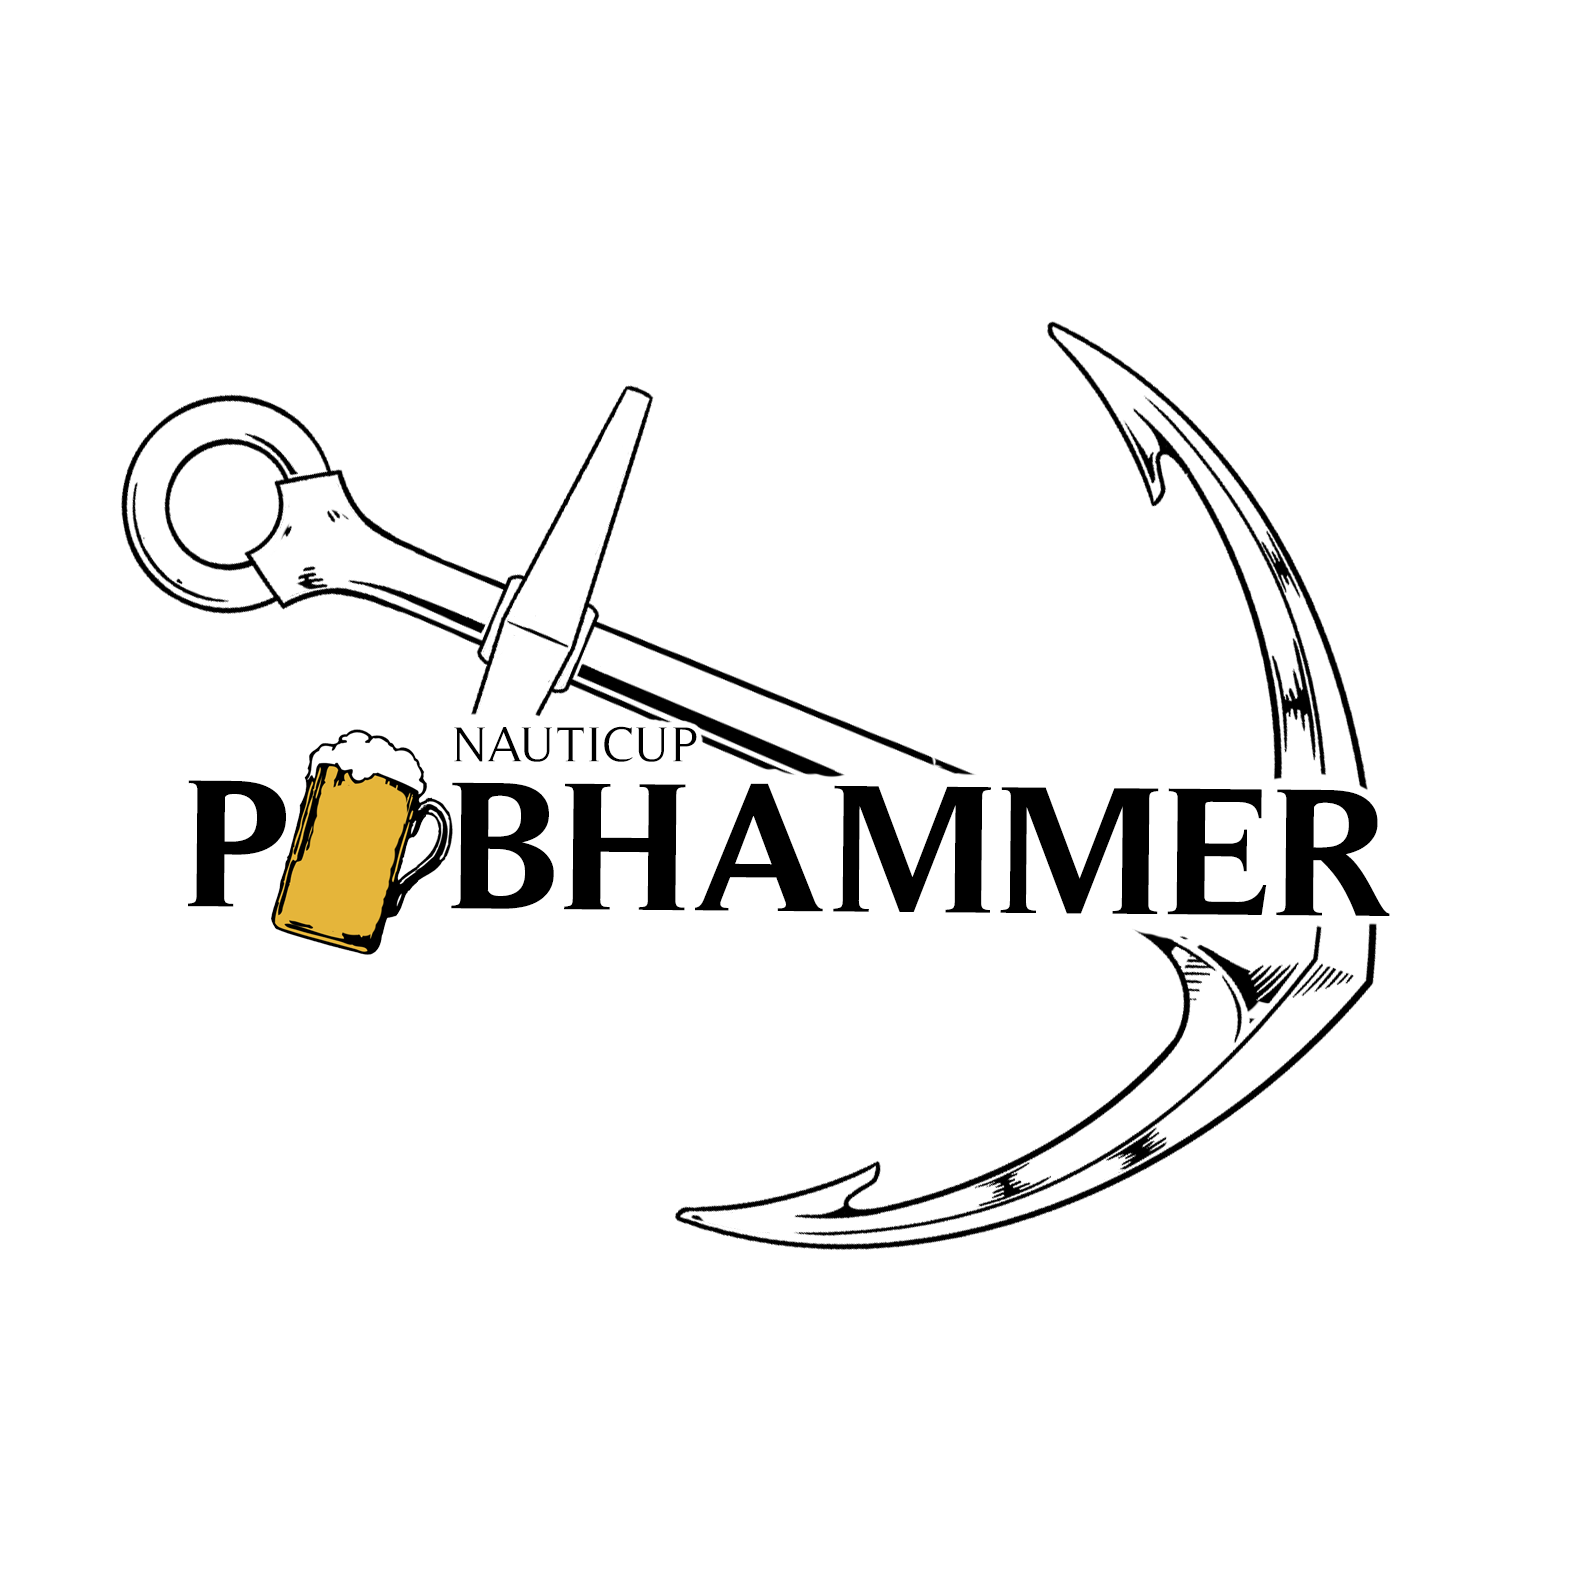 Pubhammer